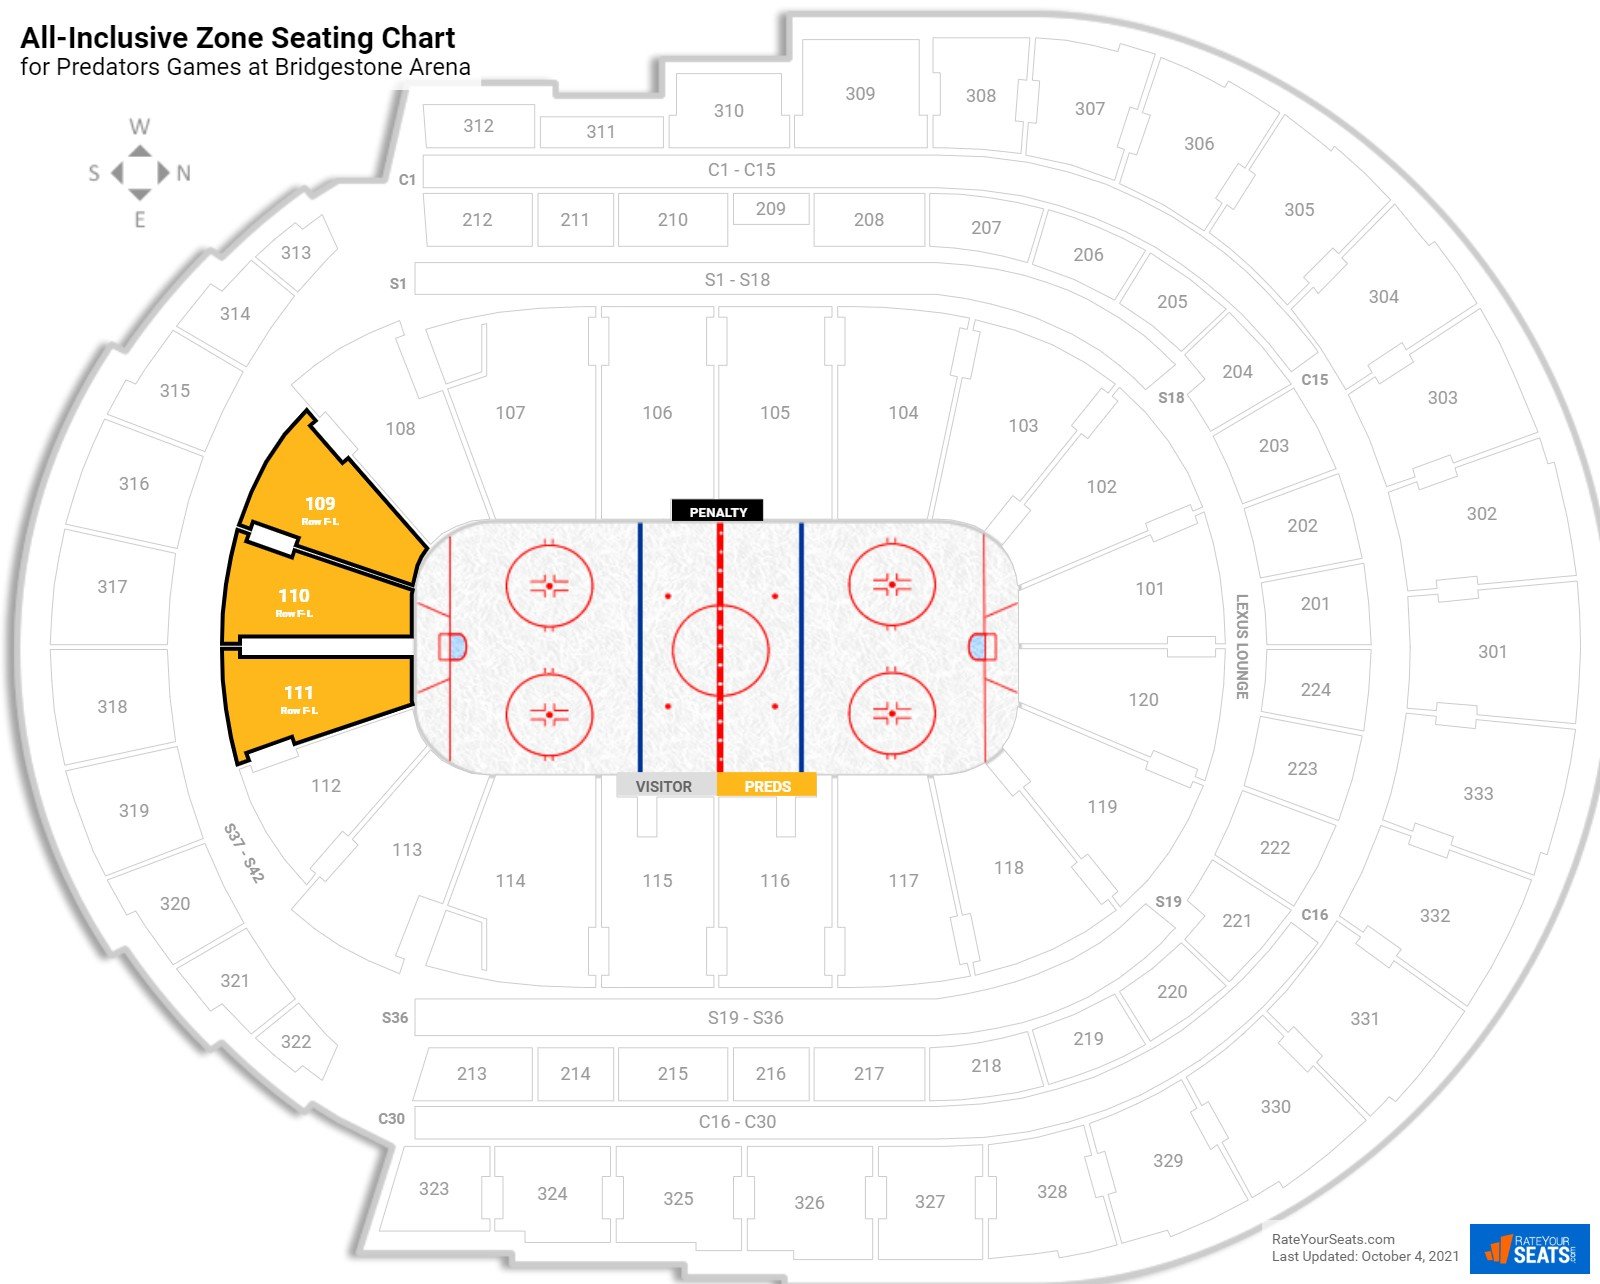 Predators All-Inclusive Zone Seating Chart at Bridgestone Arena